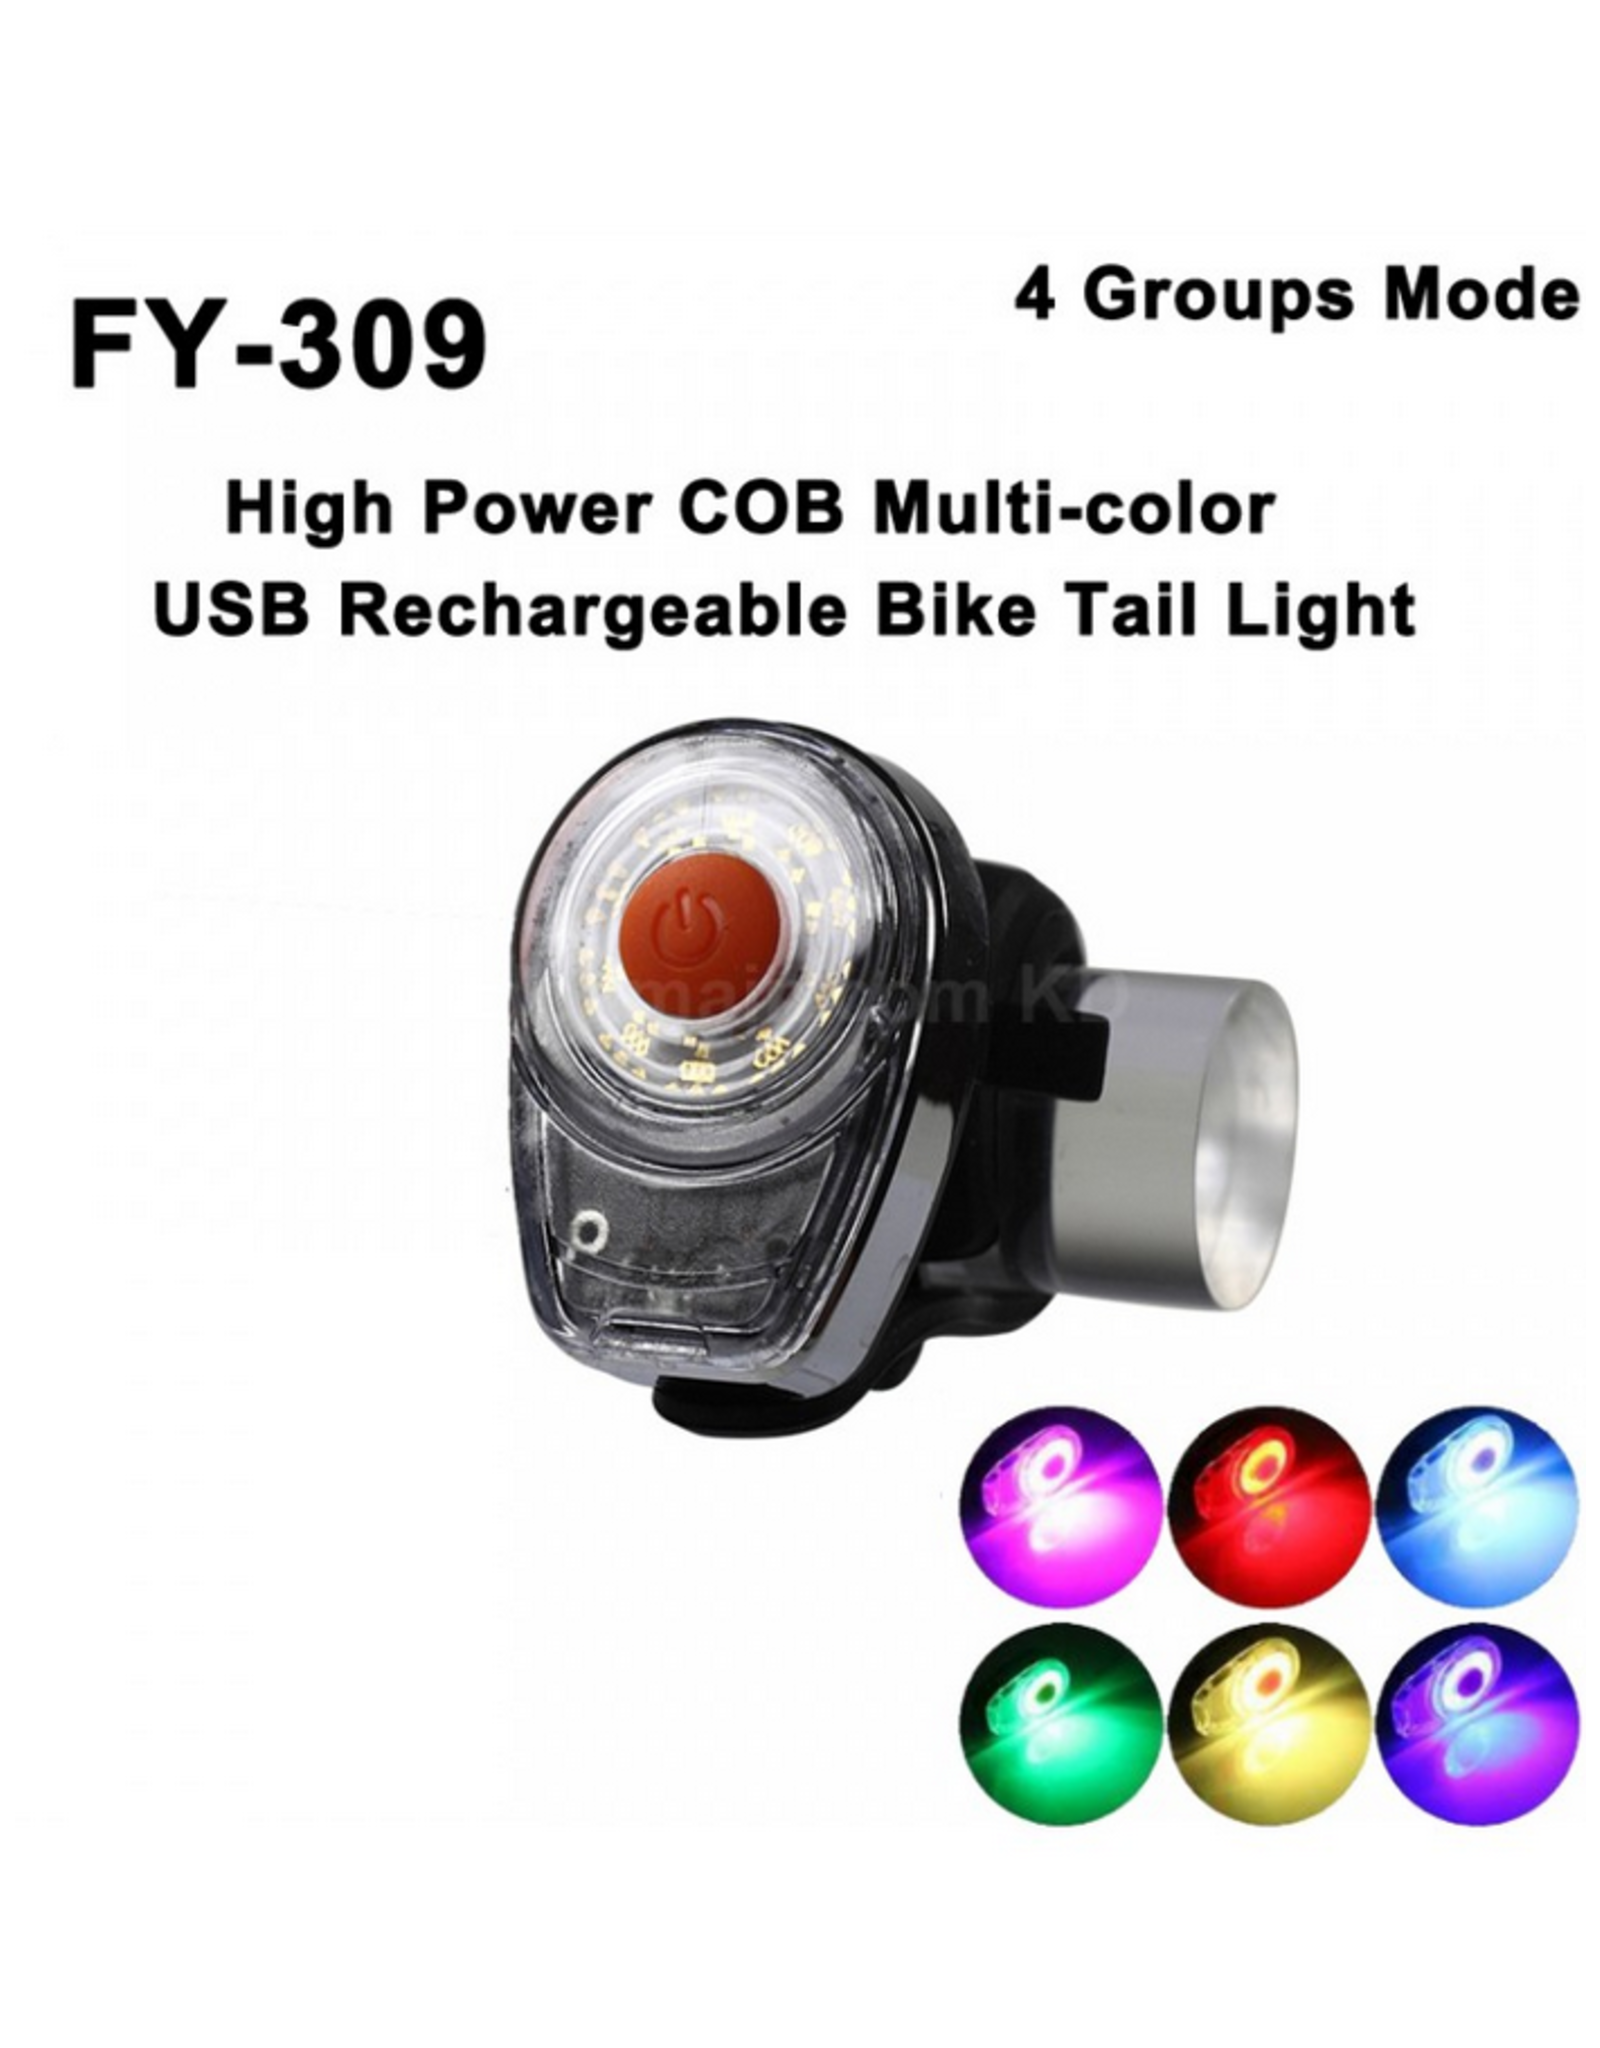 FY-309 High Power COB Bike Tail Light ( 1 pc )